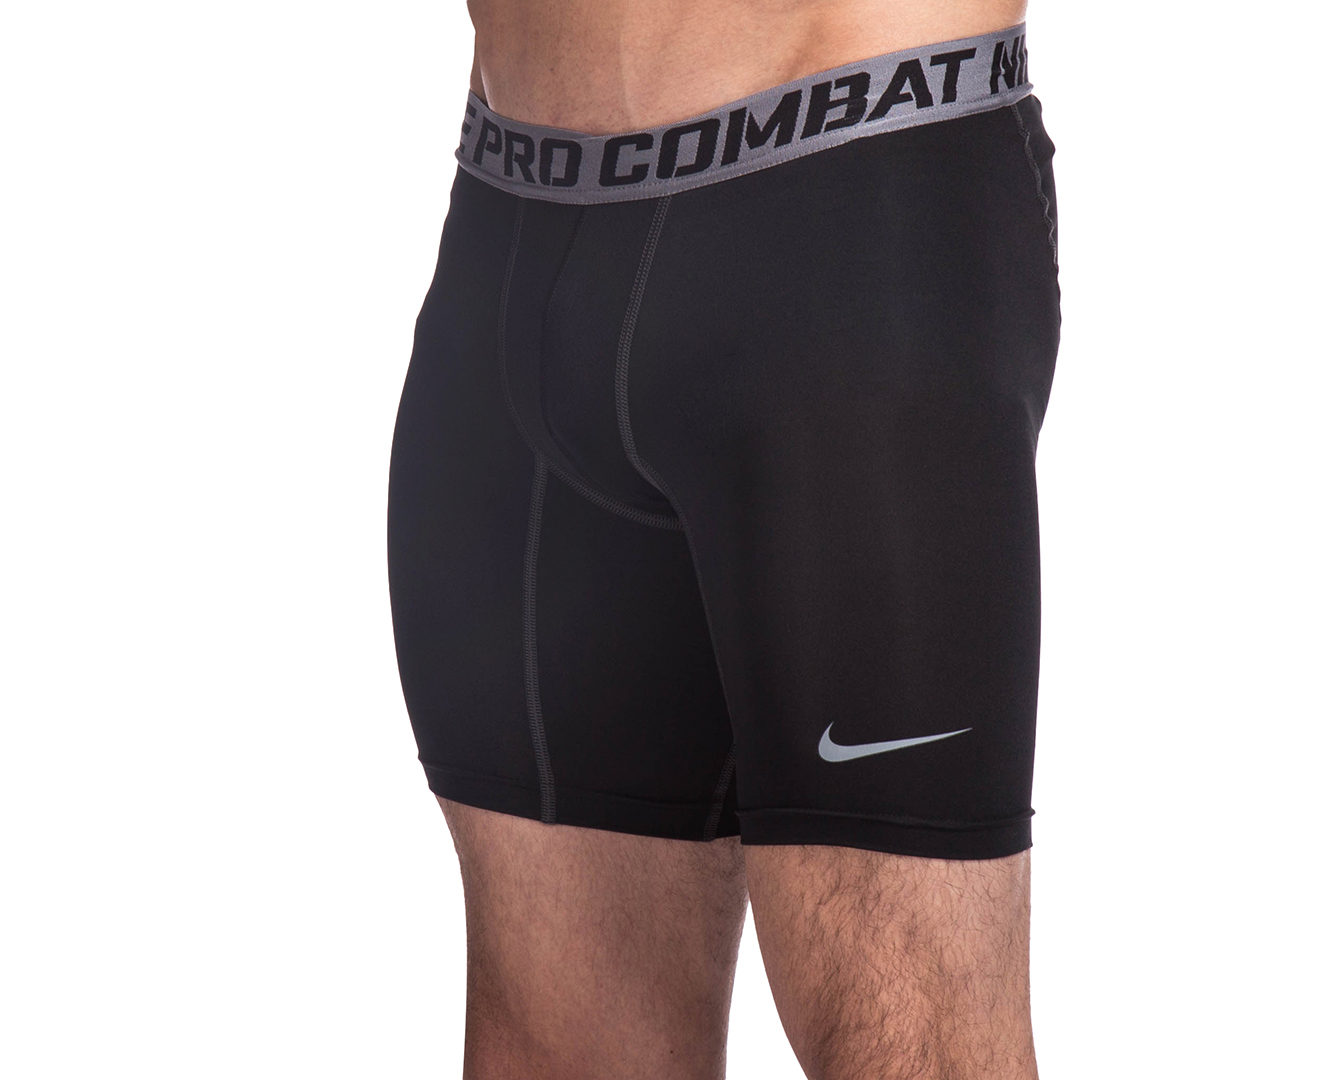 Nike Men's Pro Core 6” Compression Shorts - Black